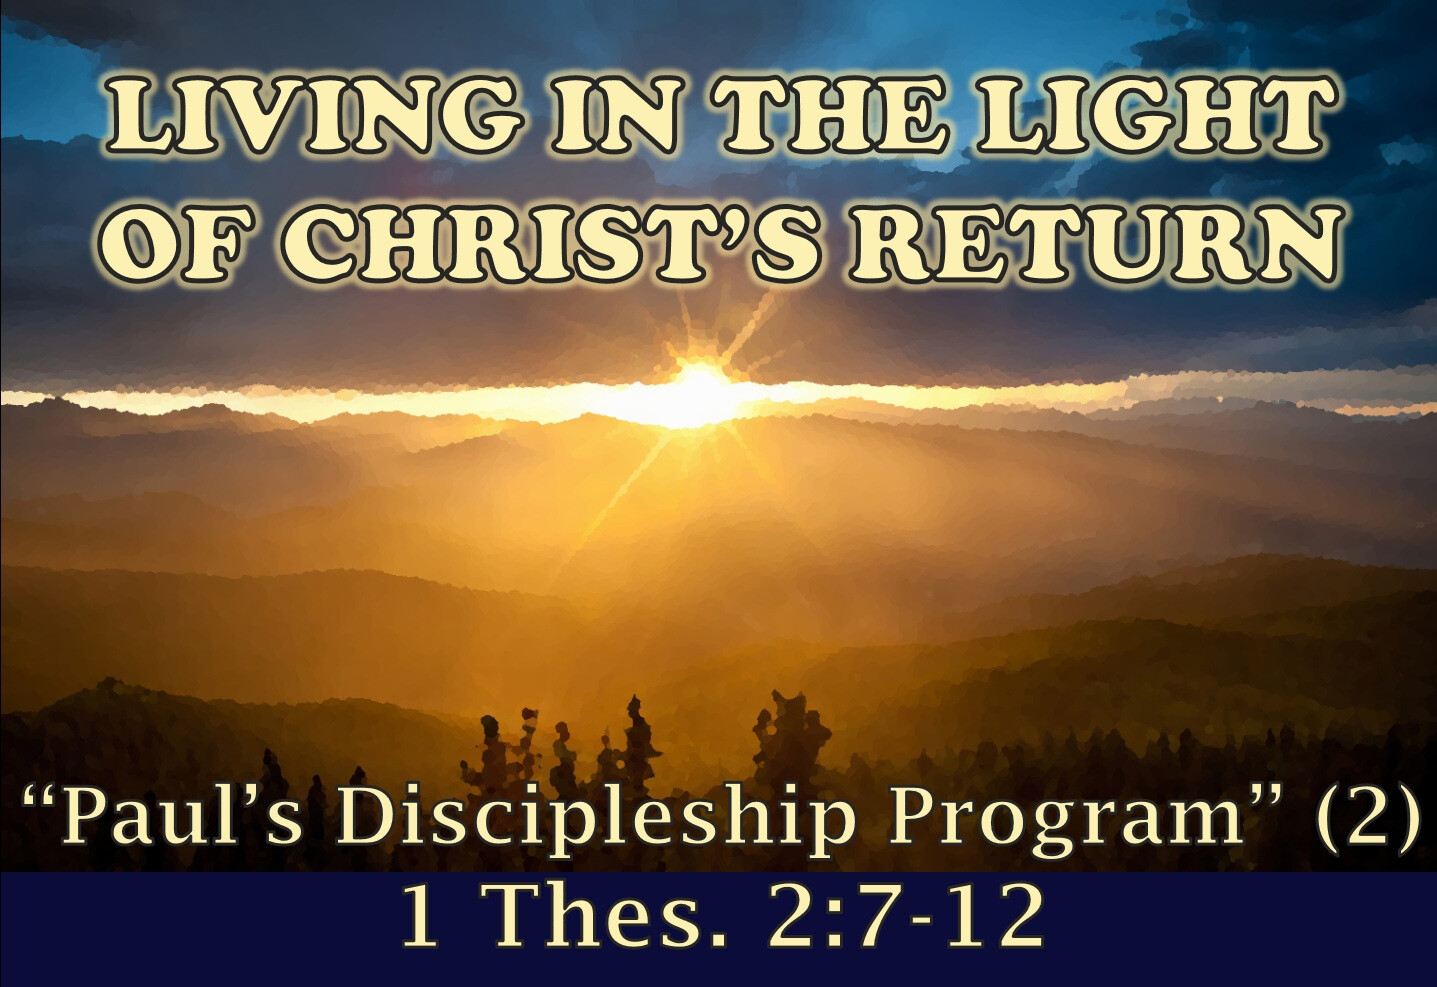 Paul's Discipleship Program (2)